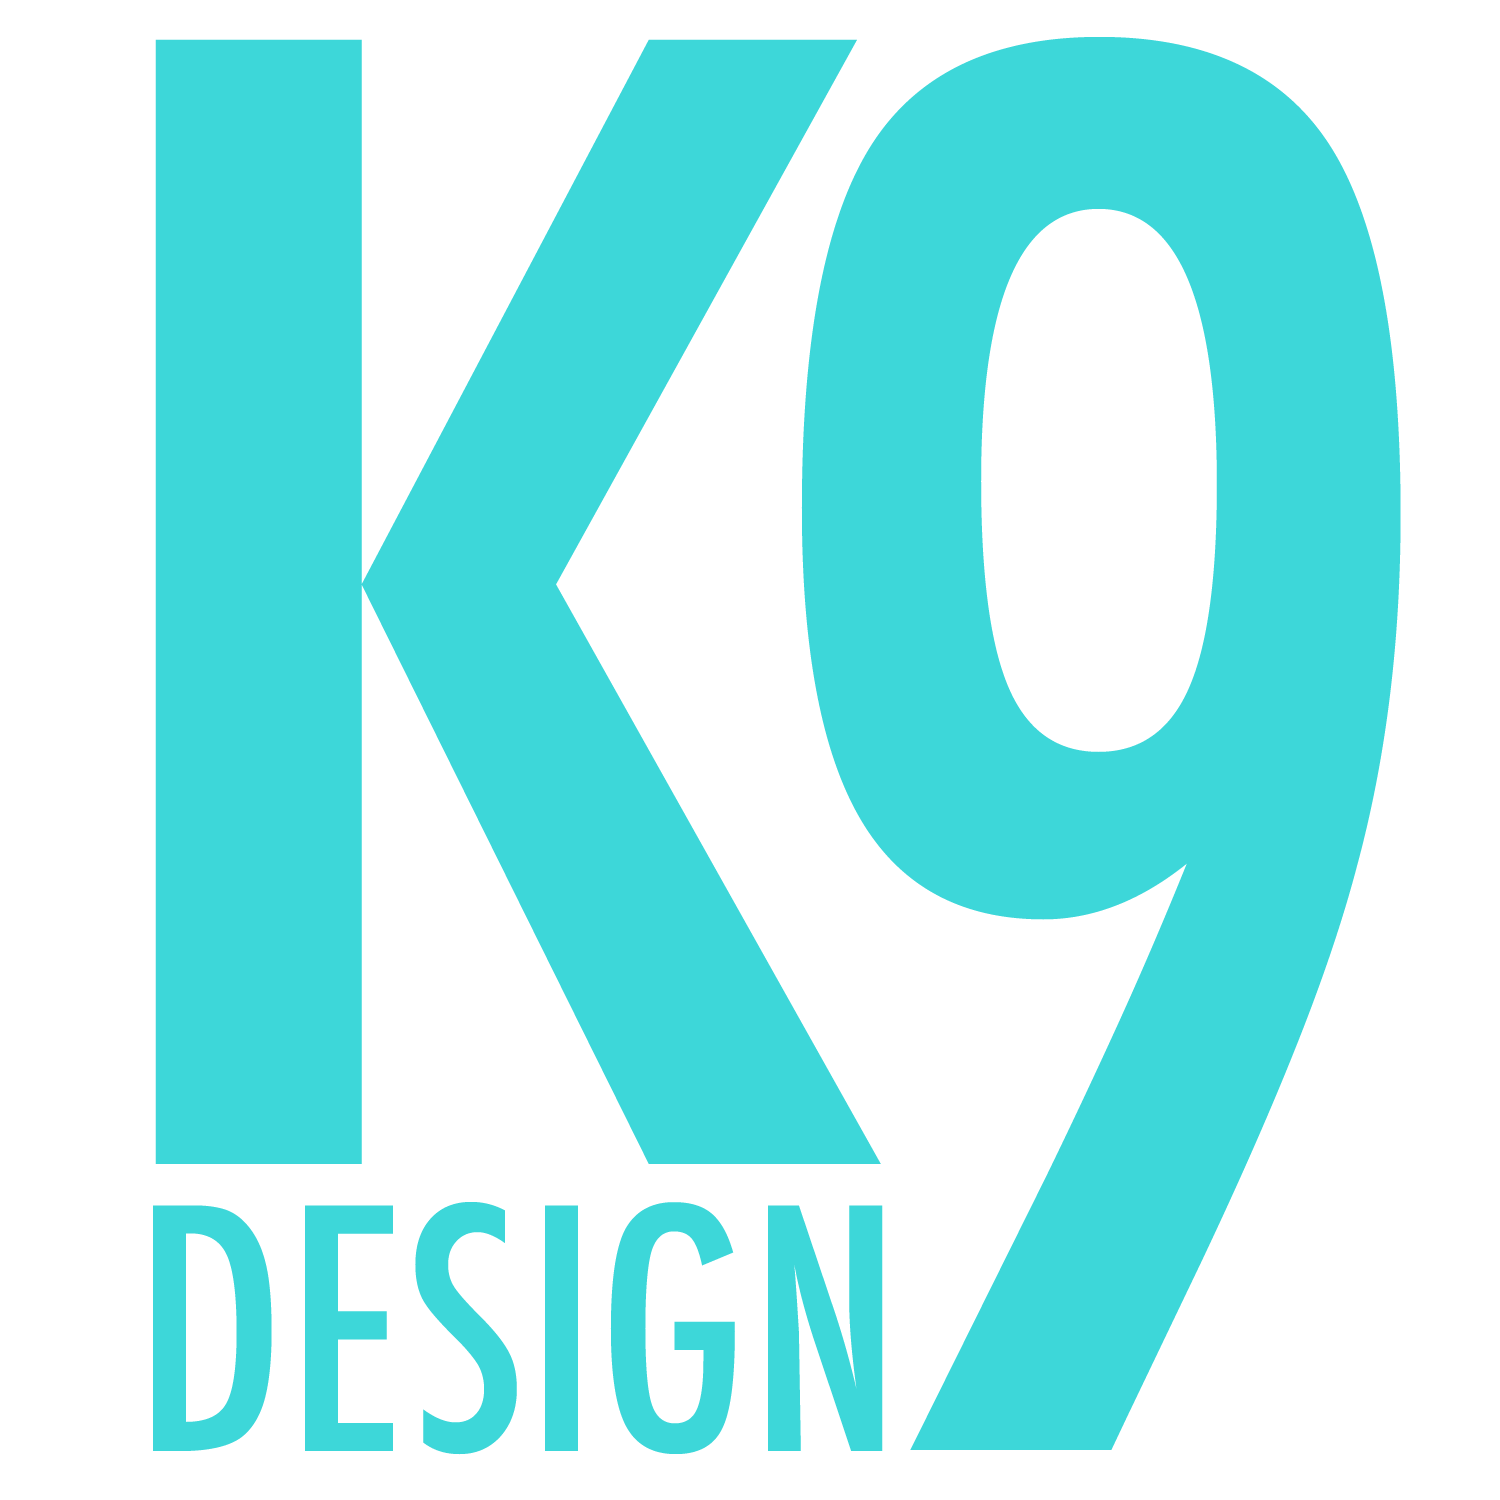 K9Design